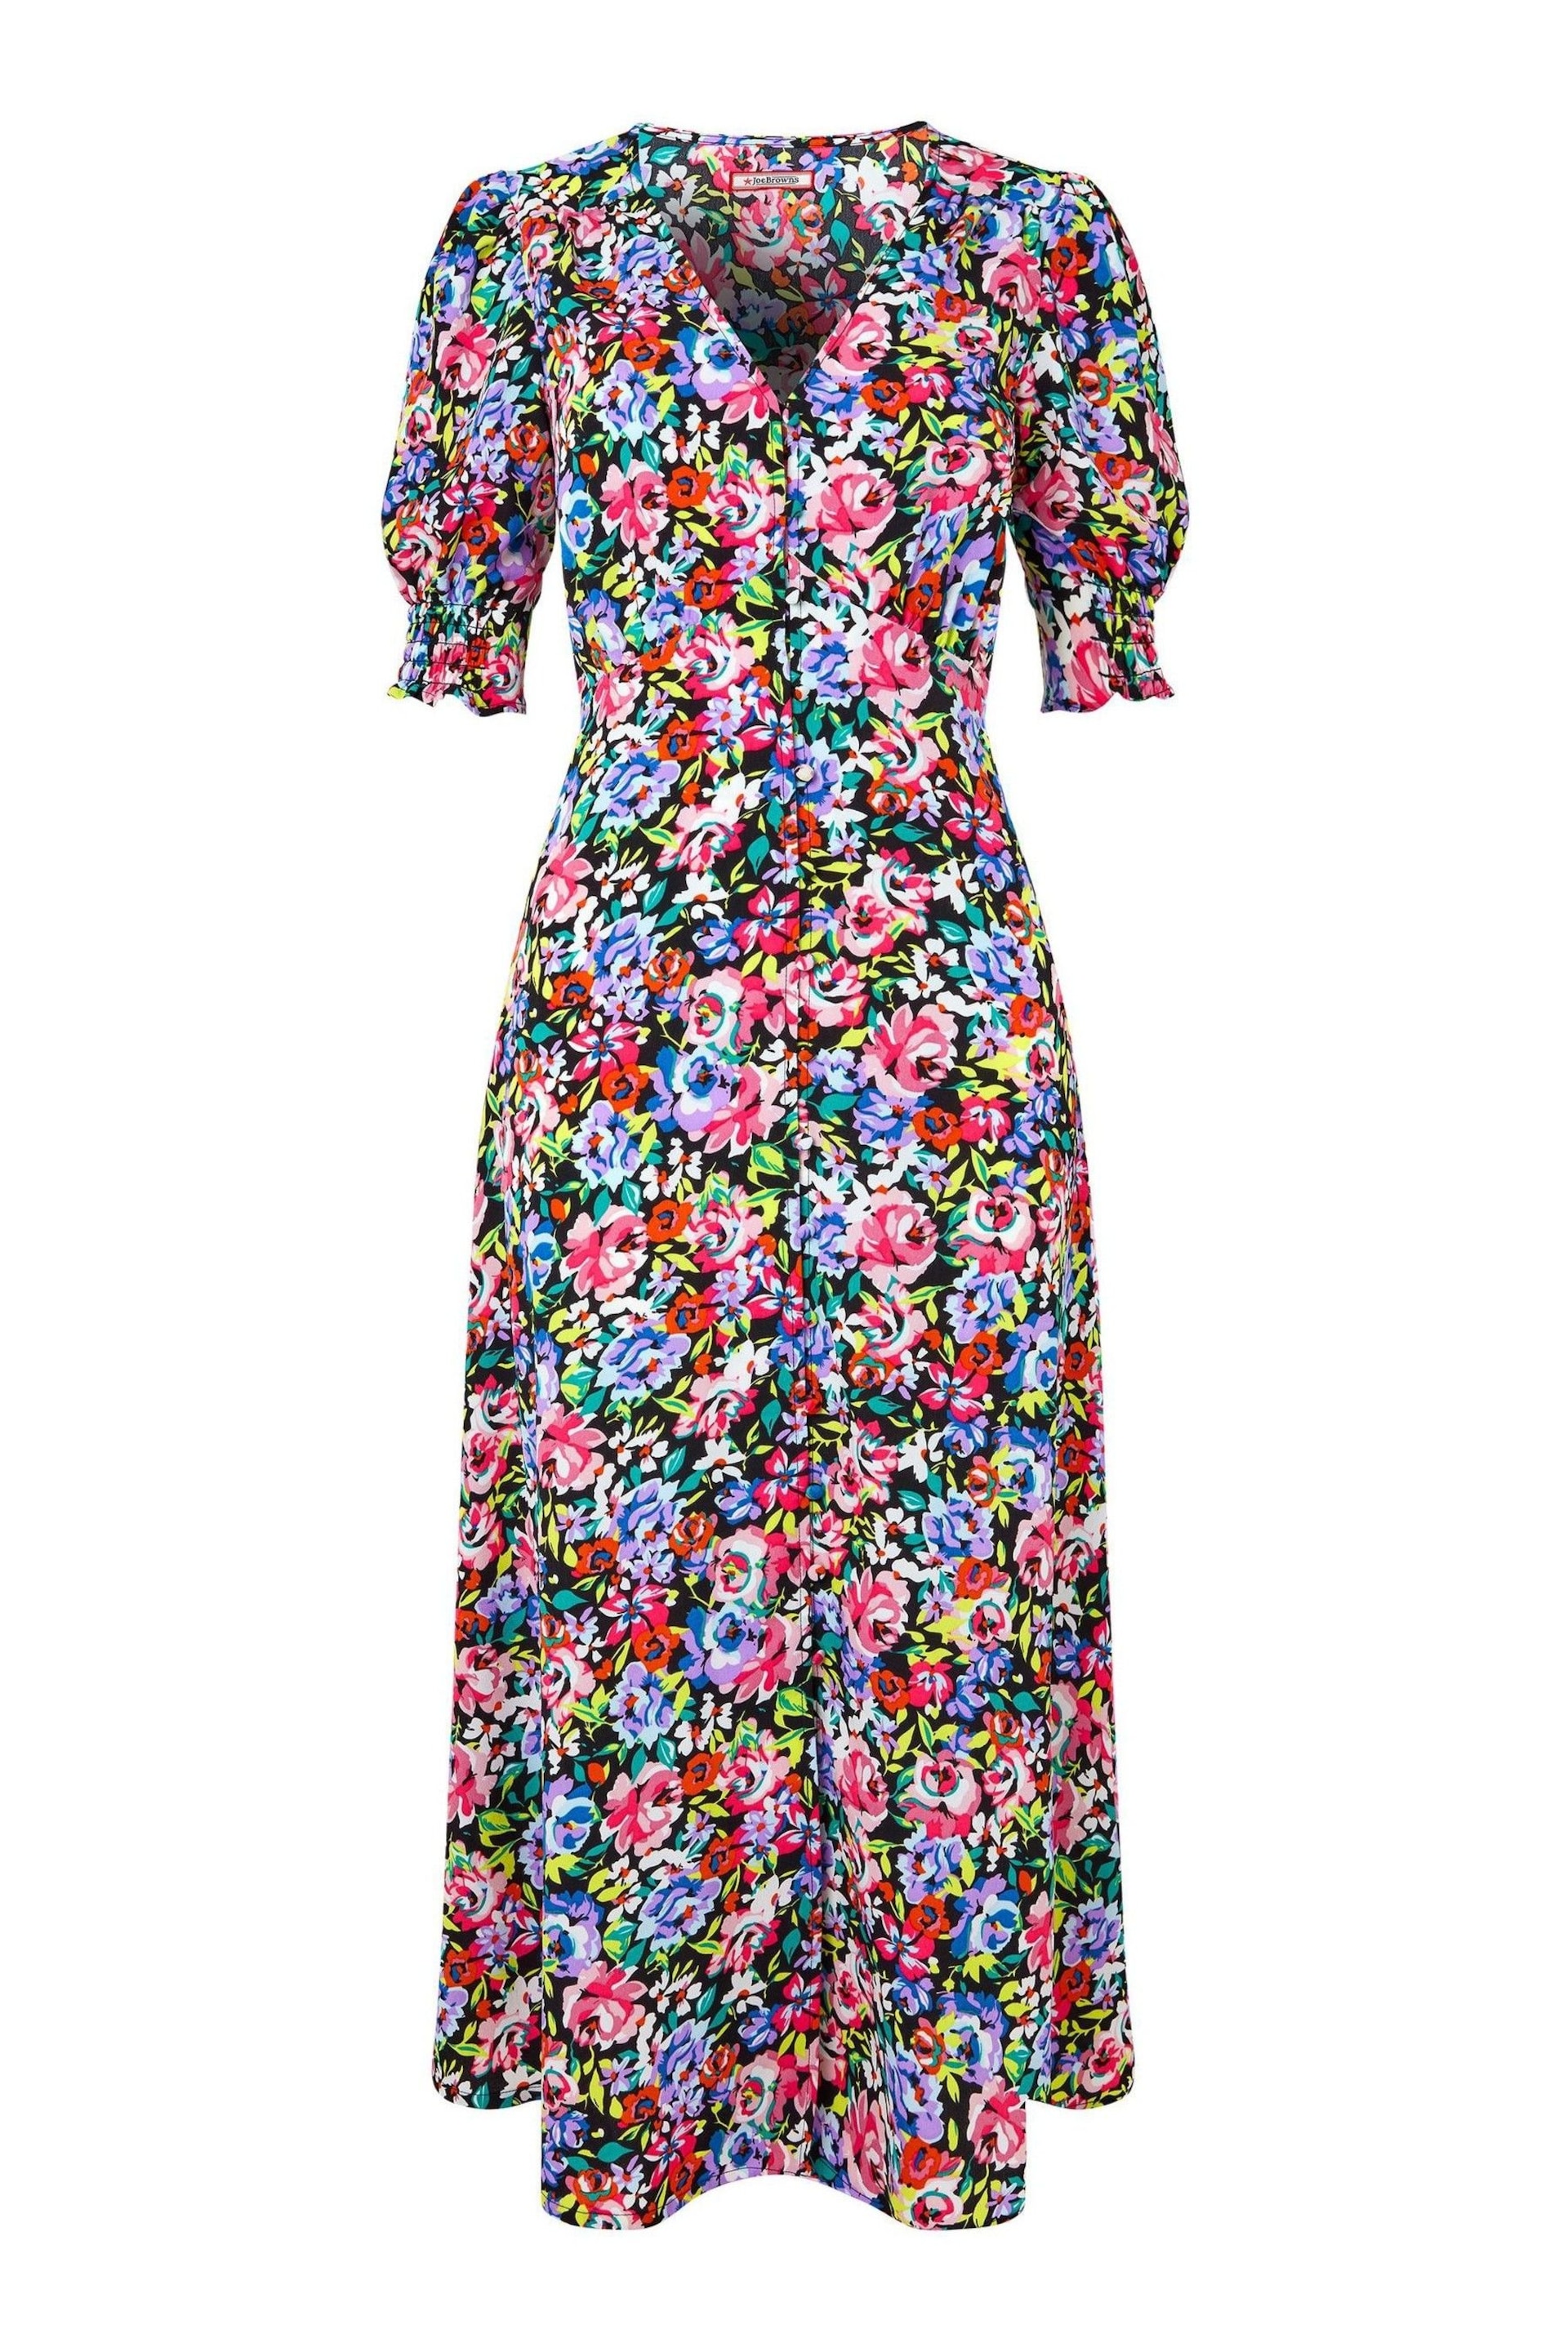 Joe Browns Multi Neon Pop Floral Midi Dress - Image 7 of 7